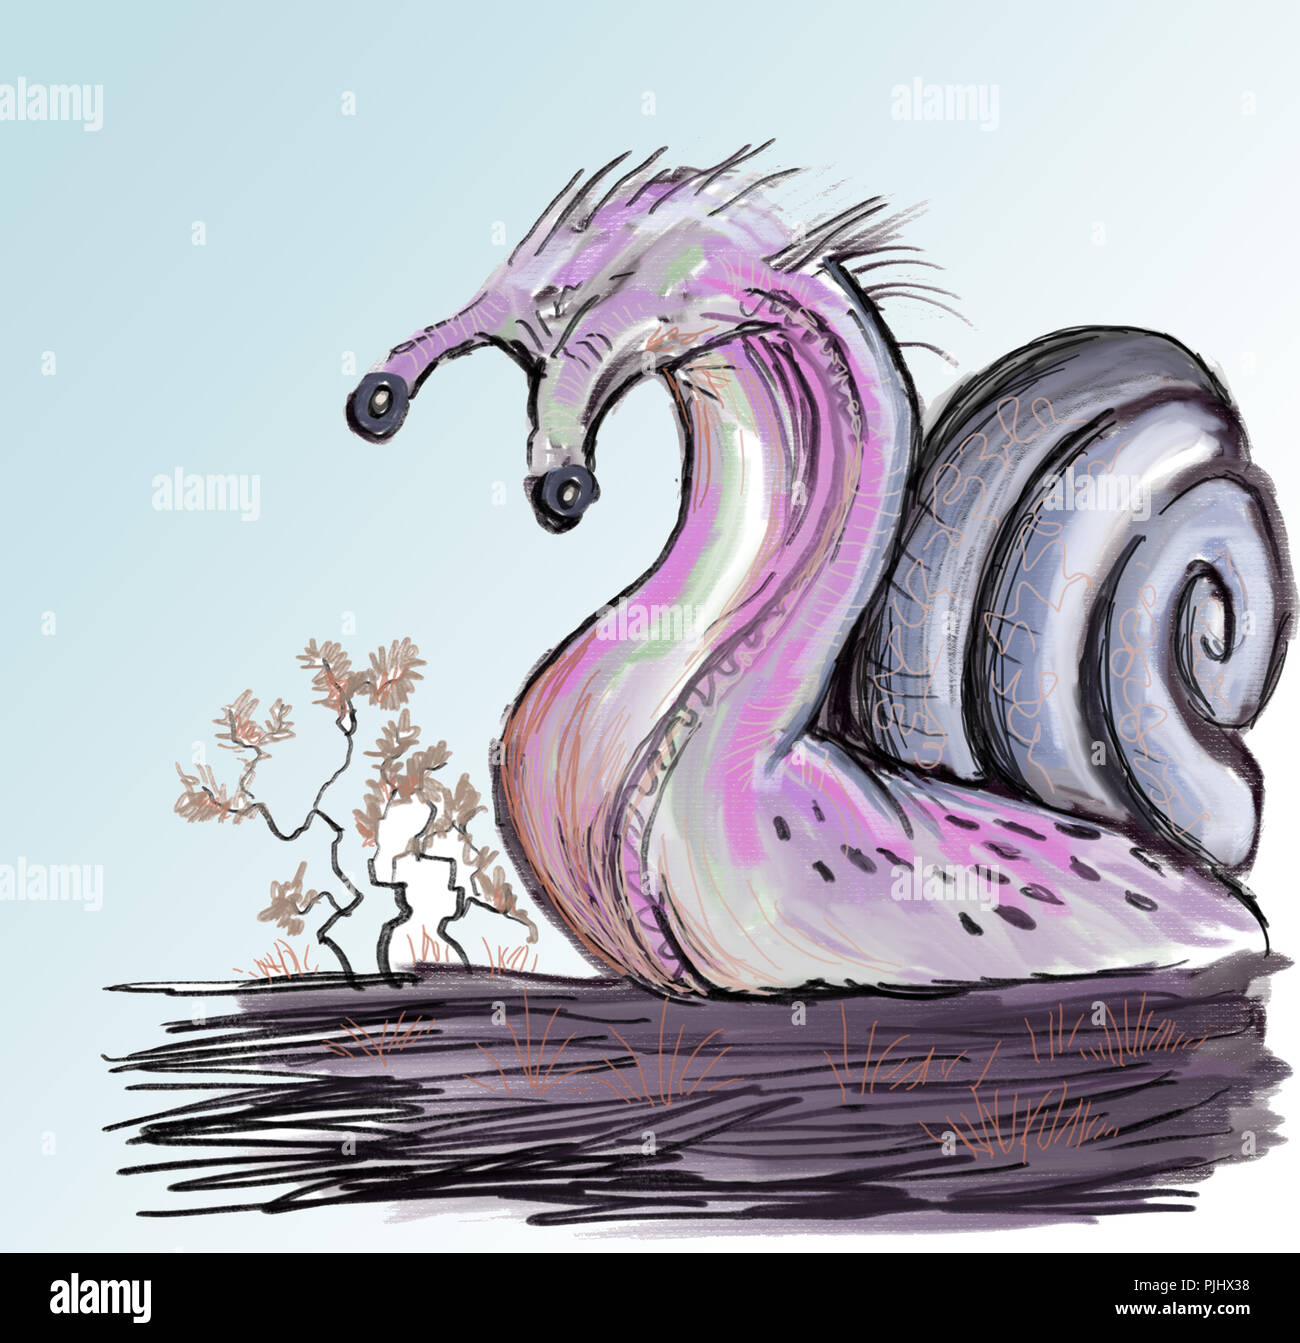 fantastical snail illustration Stock Photo